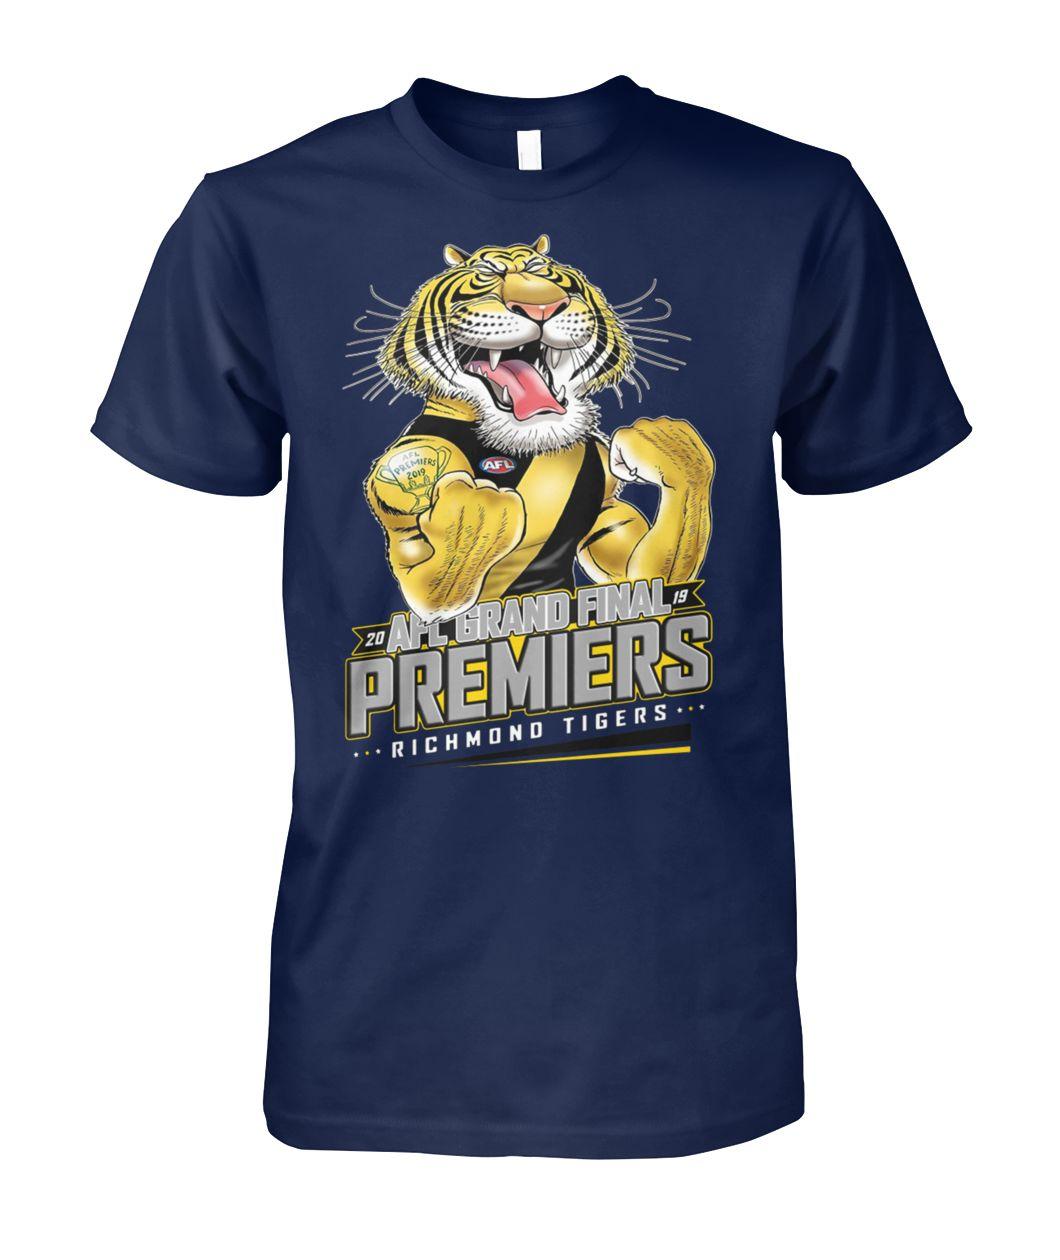 20 AFL grand final premiers richmond tigers unisex cotton tee